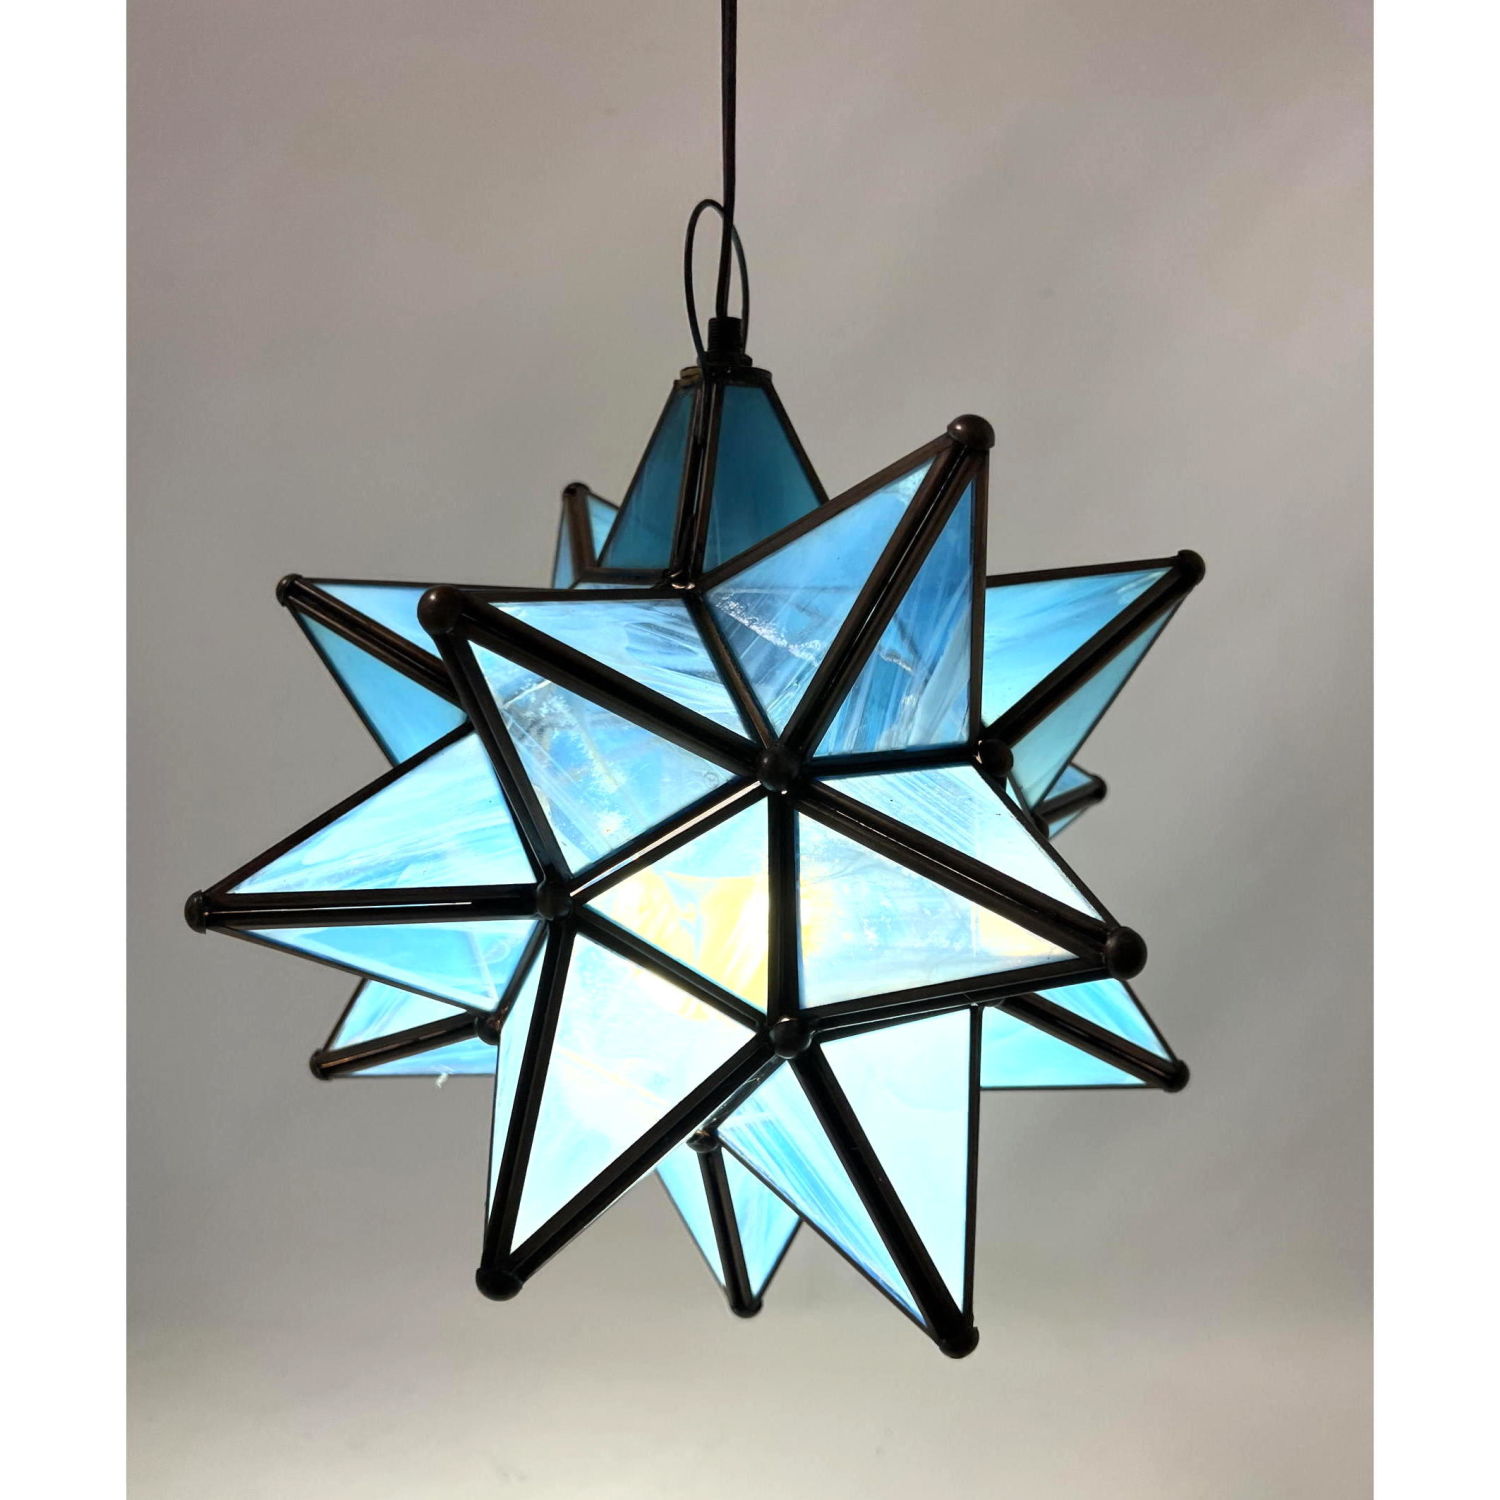 Blue glass star form pendant lamp. 

Dimensions: